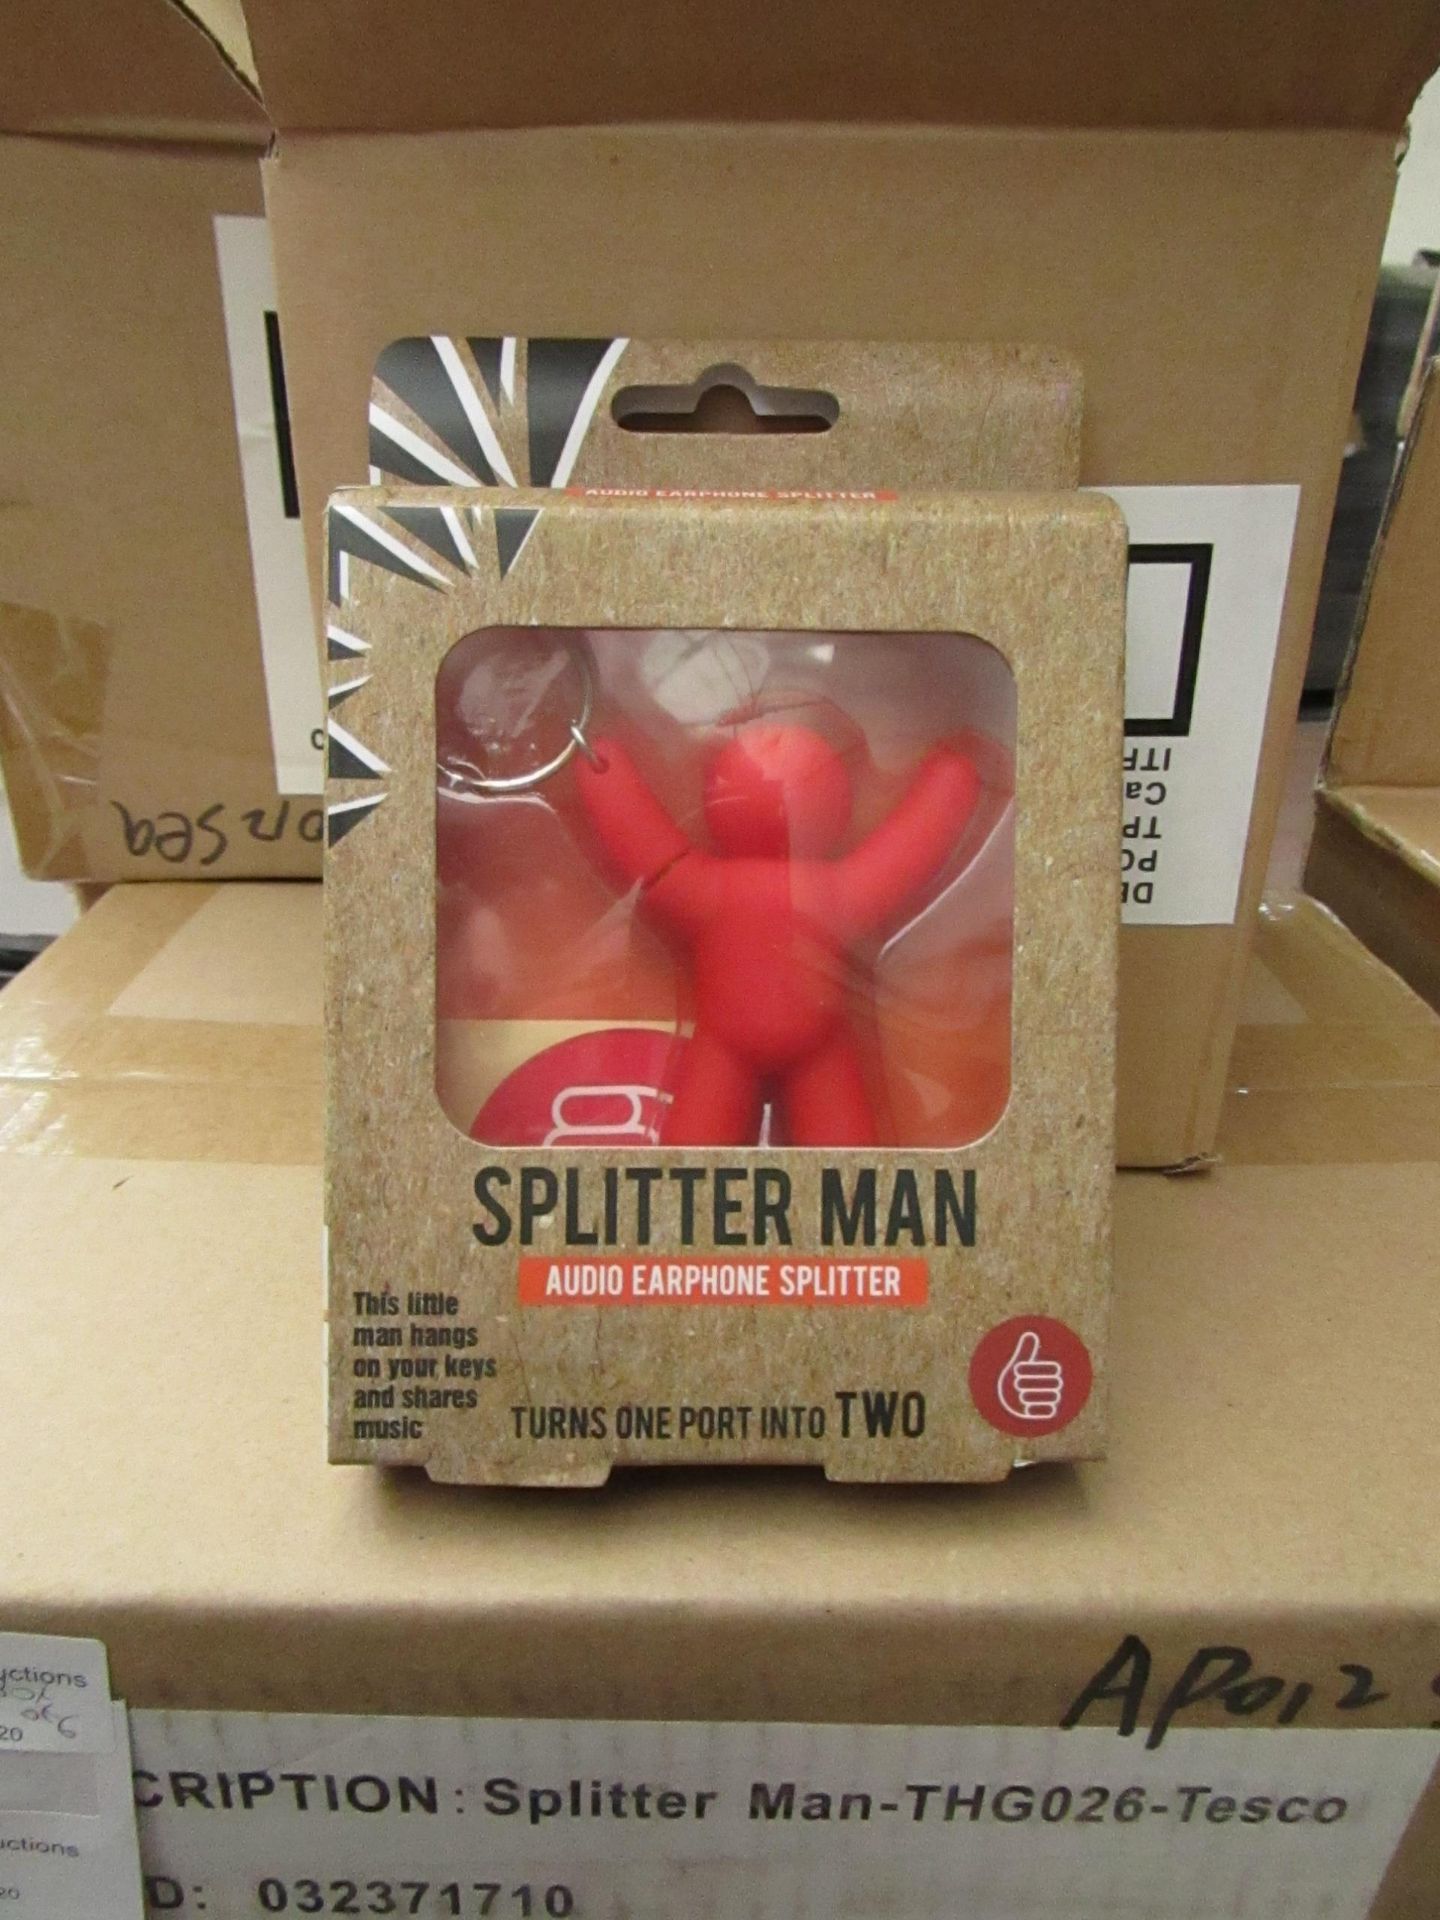 Box of 6 Splitter Man Earphone Splitters.Packaged